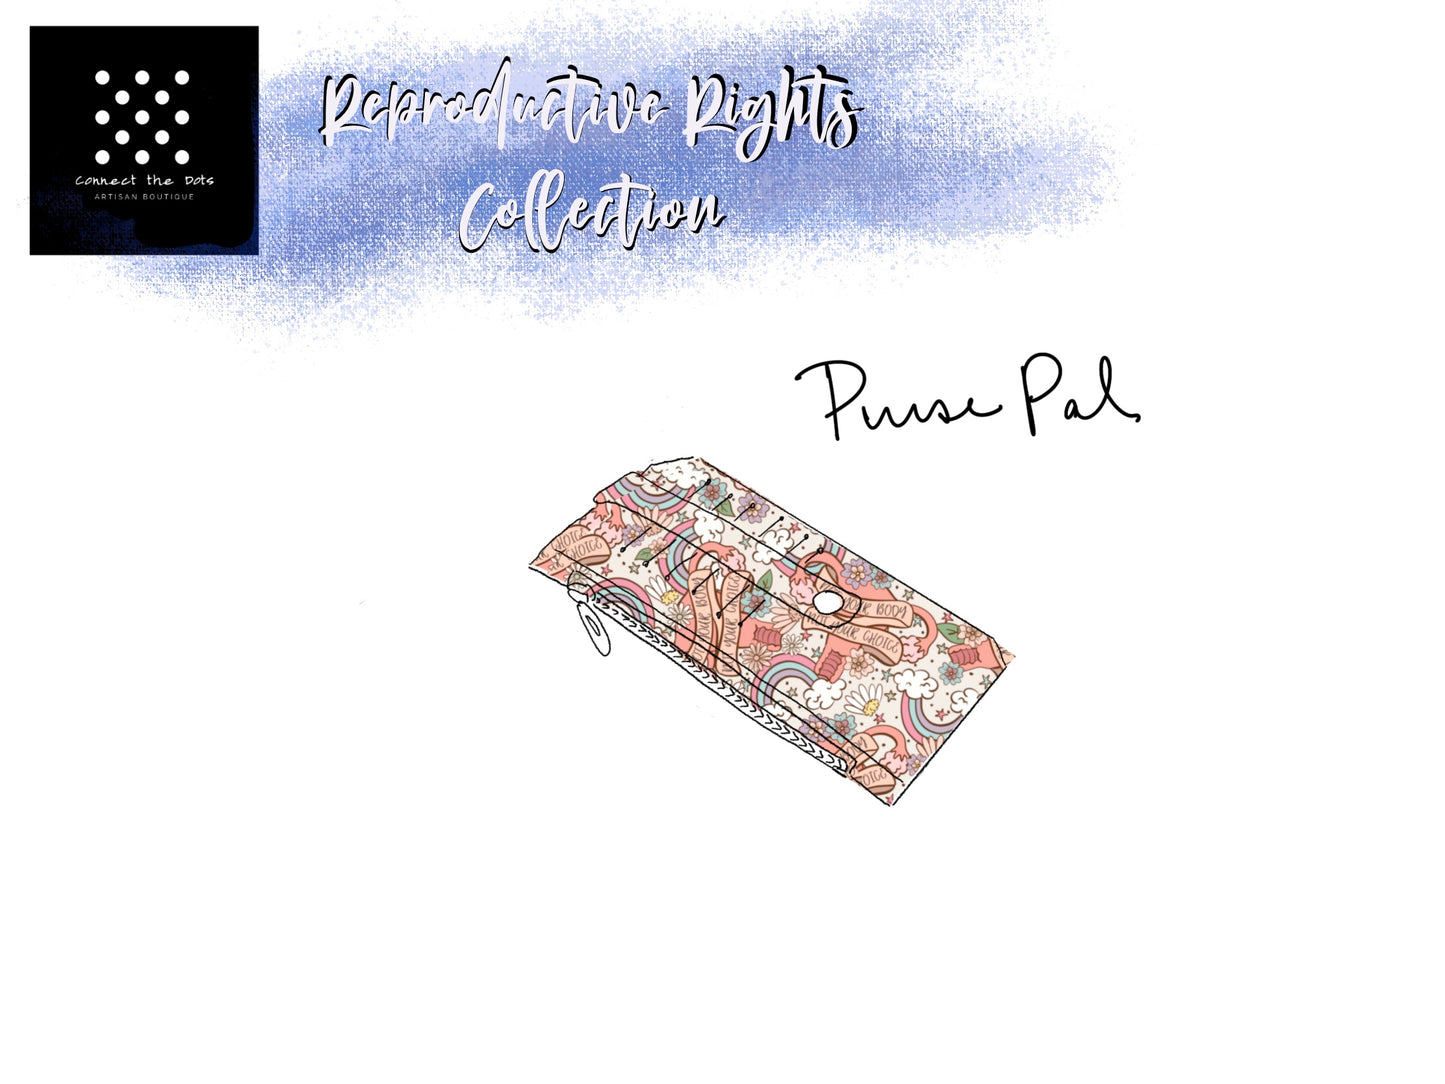 Reproductive Rights: Purse Pal (wallet)